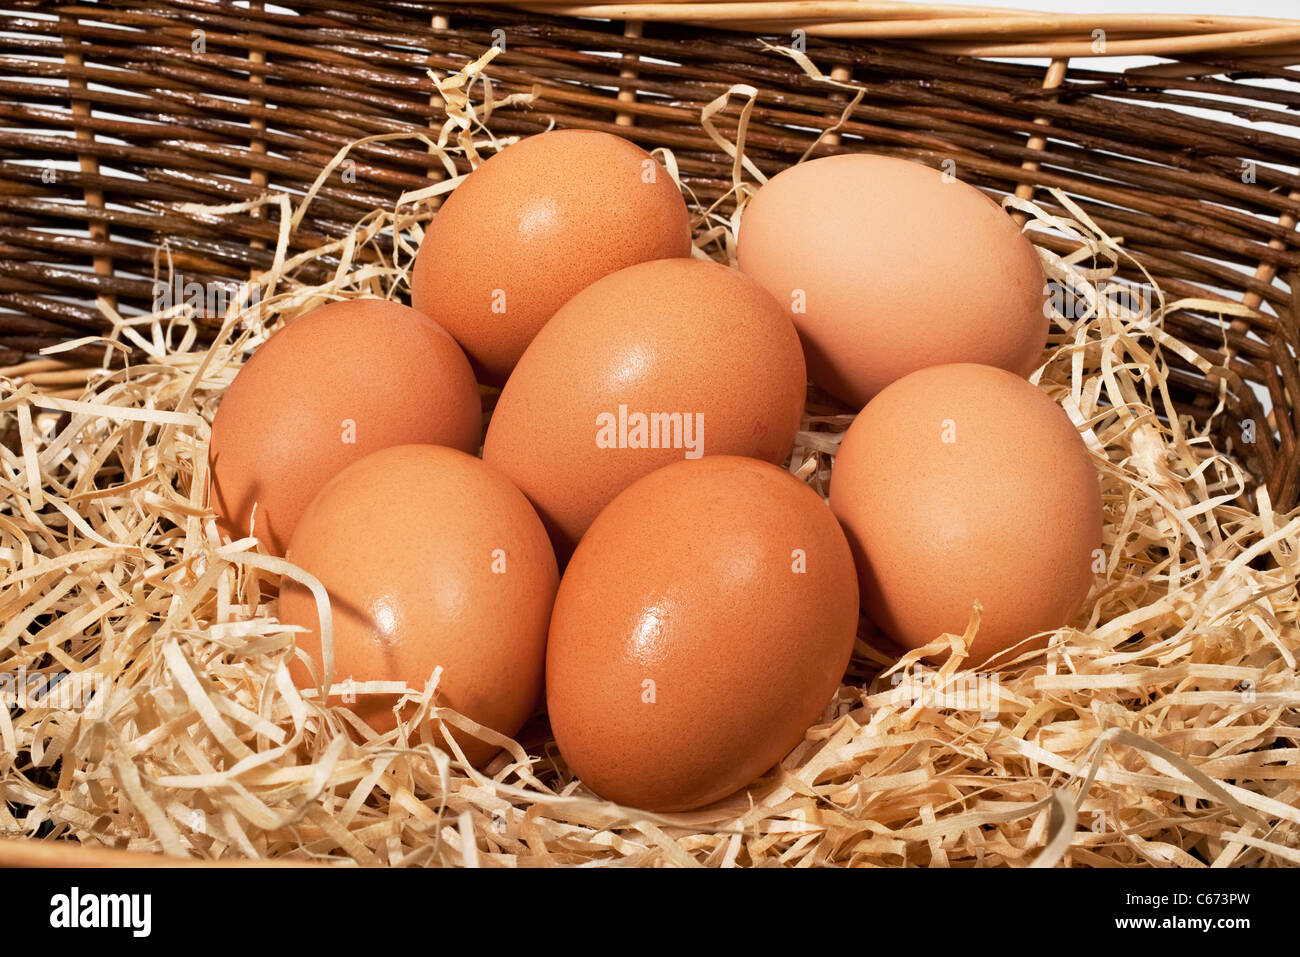 Six, half a dozen, hens eggs in a basket Stock Photo